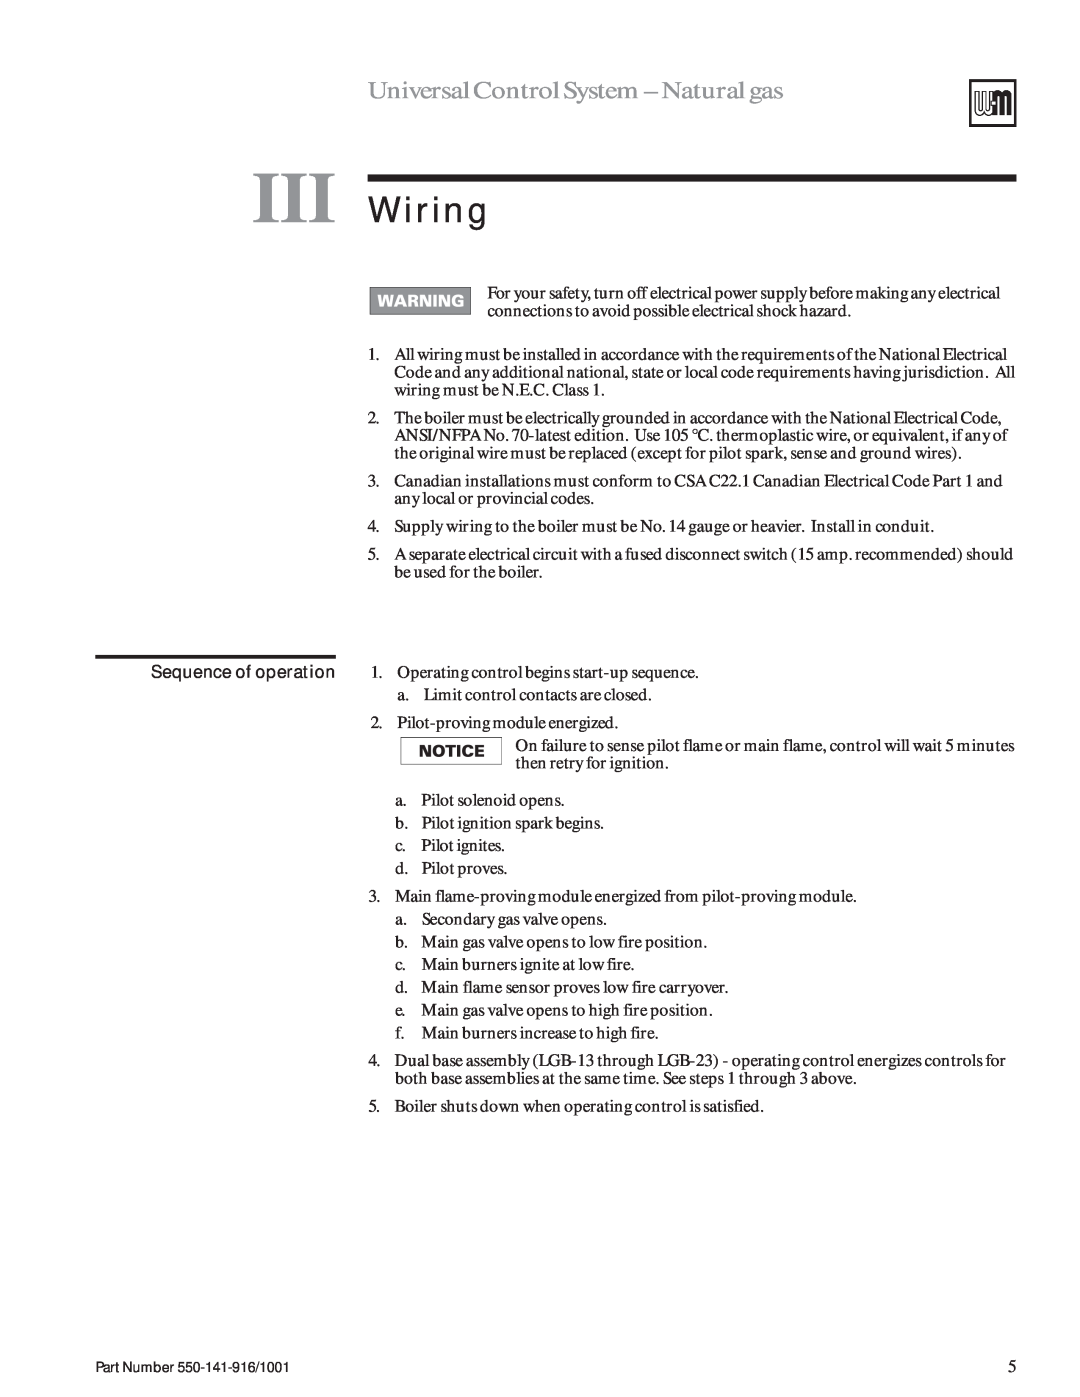 Weil-McLain LGB-23 manual III Wiring, Universal Control System - Natural gas 